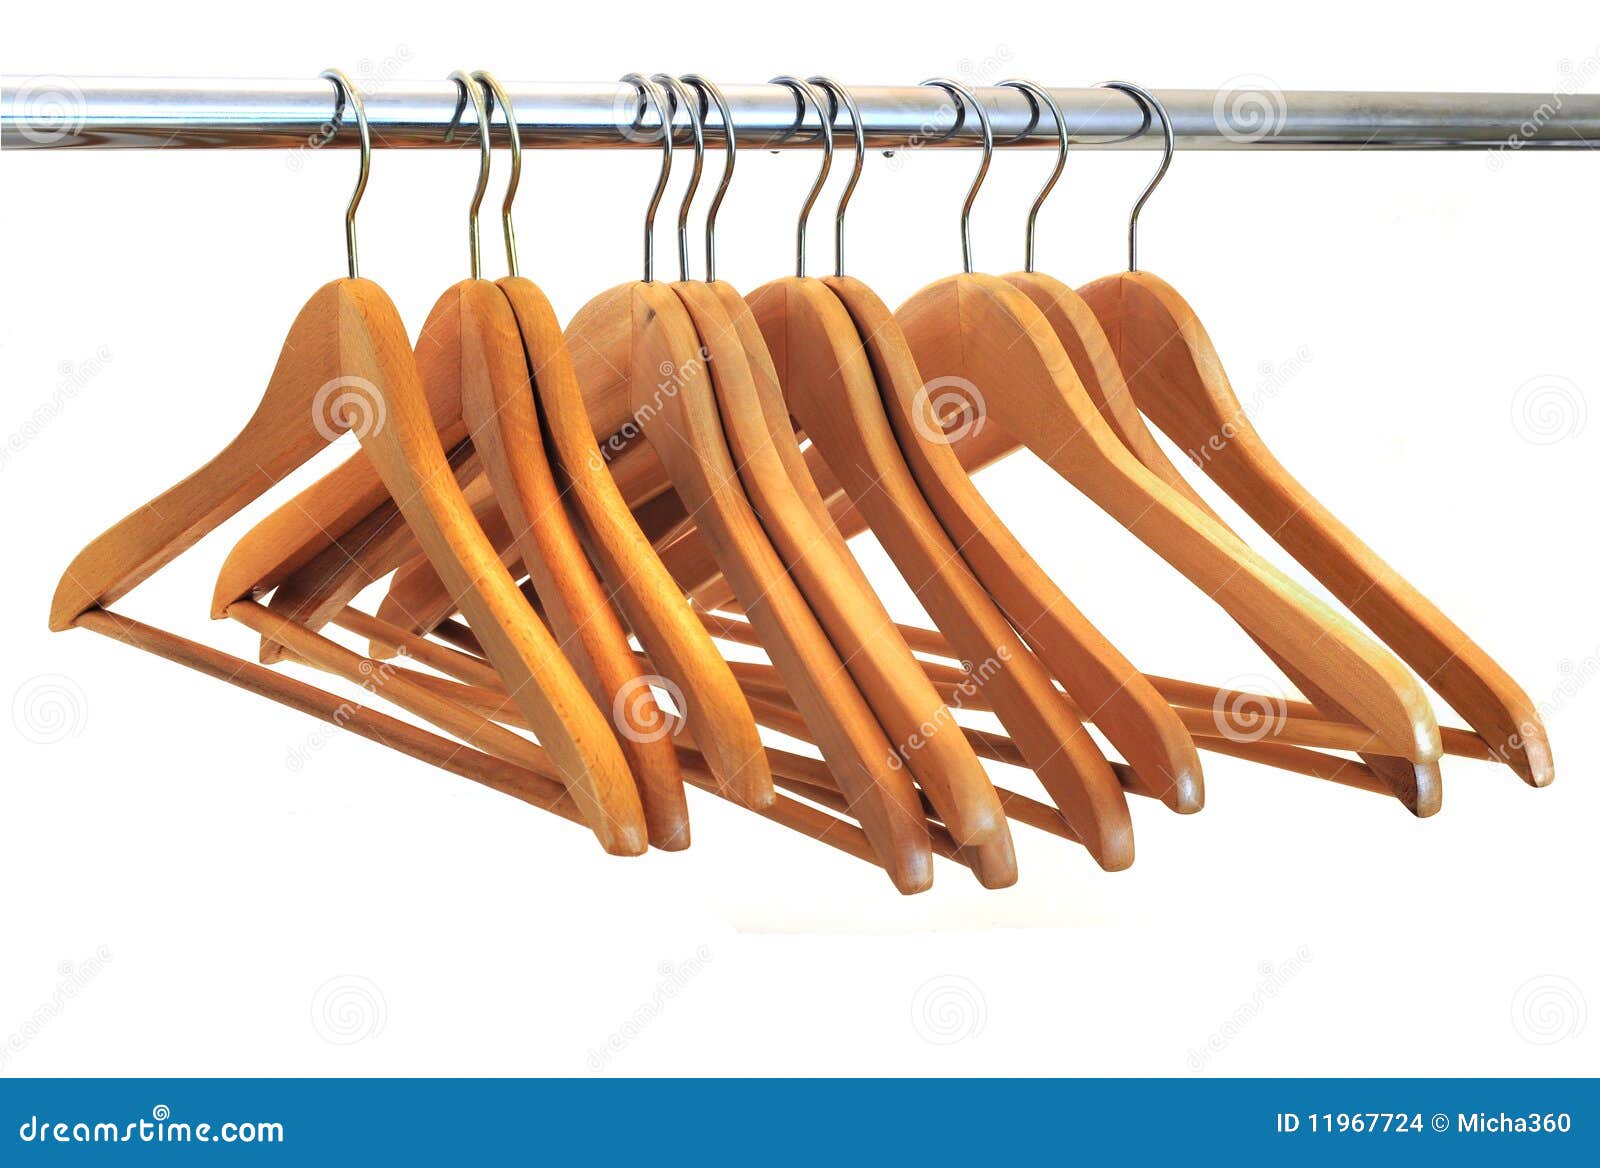 1,232 String Hanger Stock Photos - Free & Royalty-Free Stock